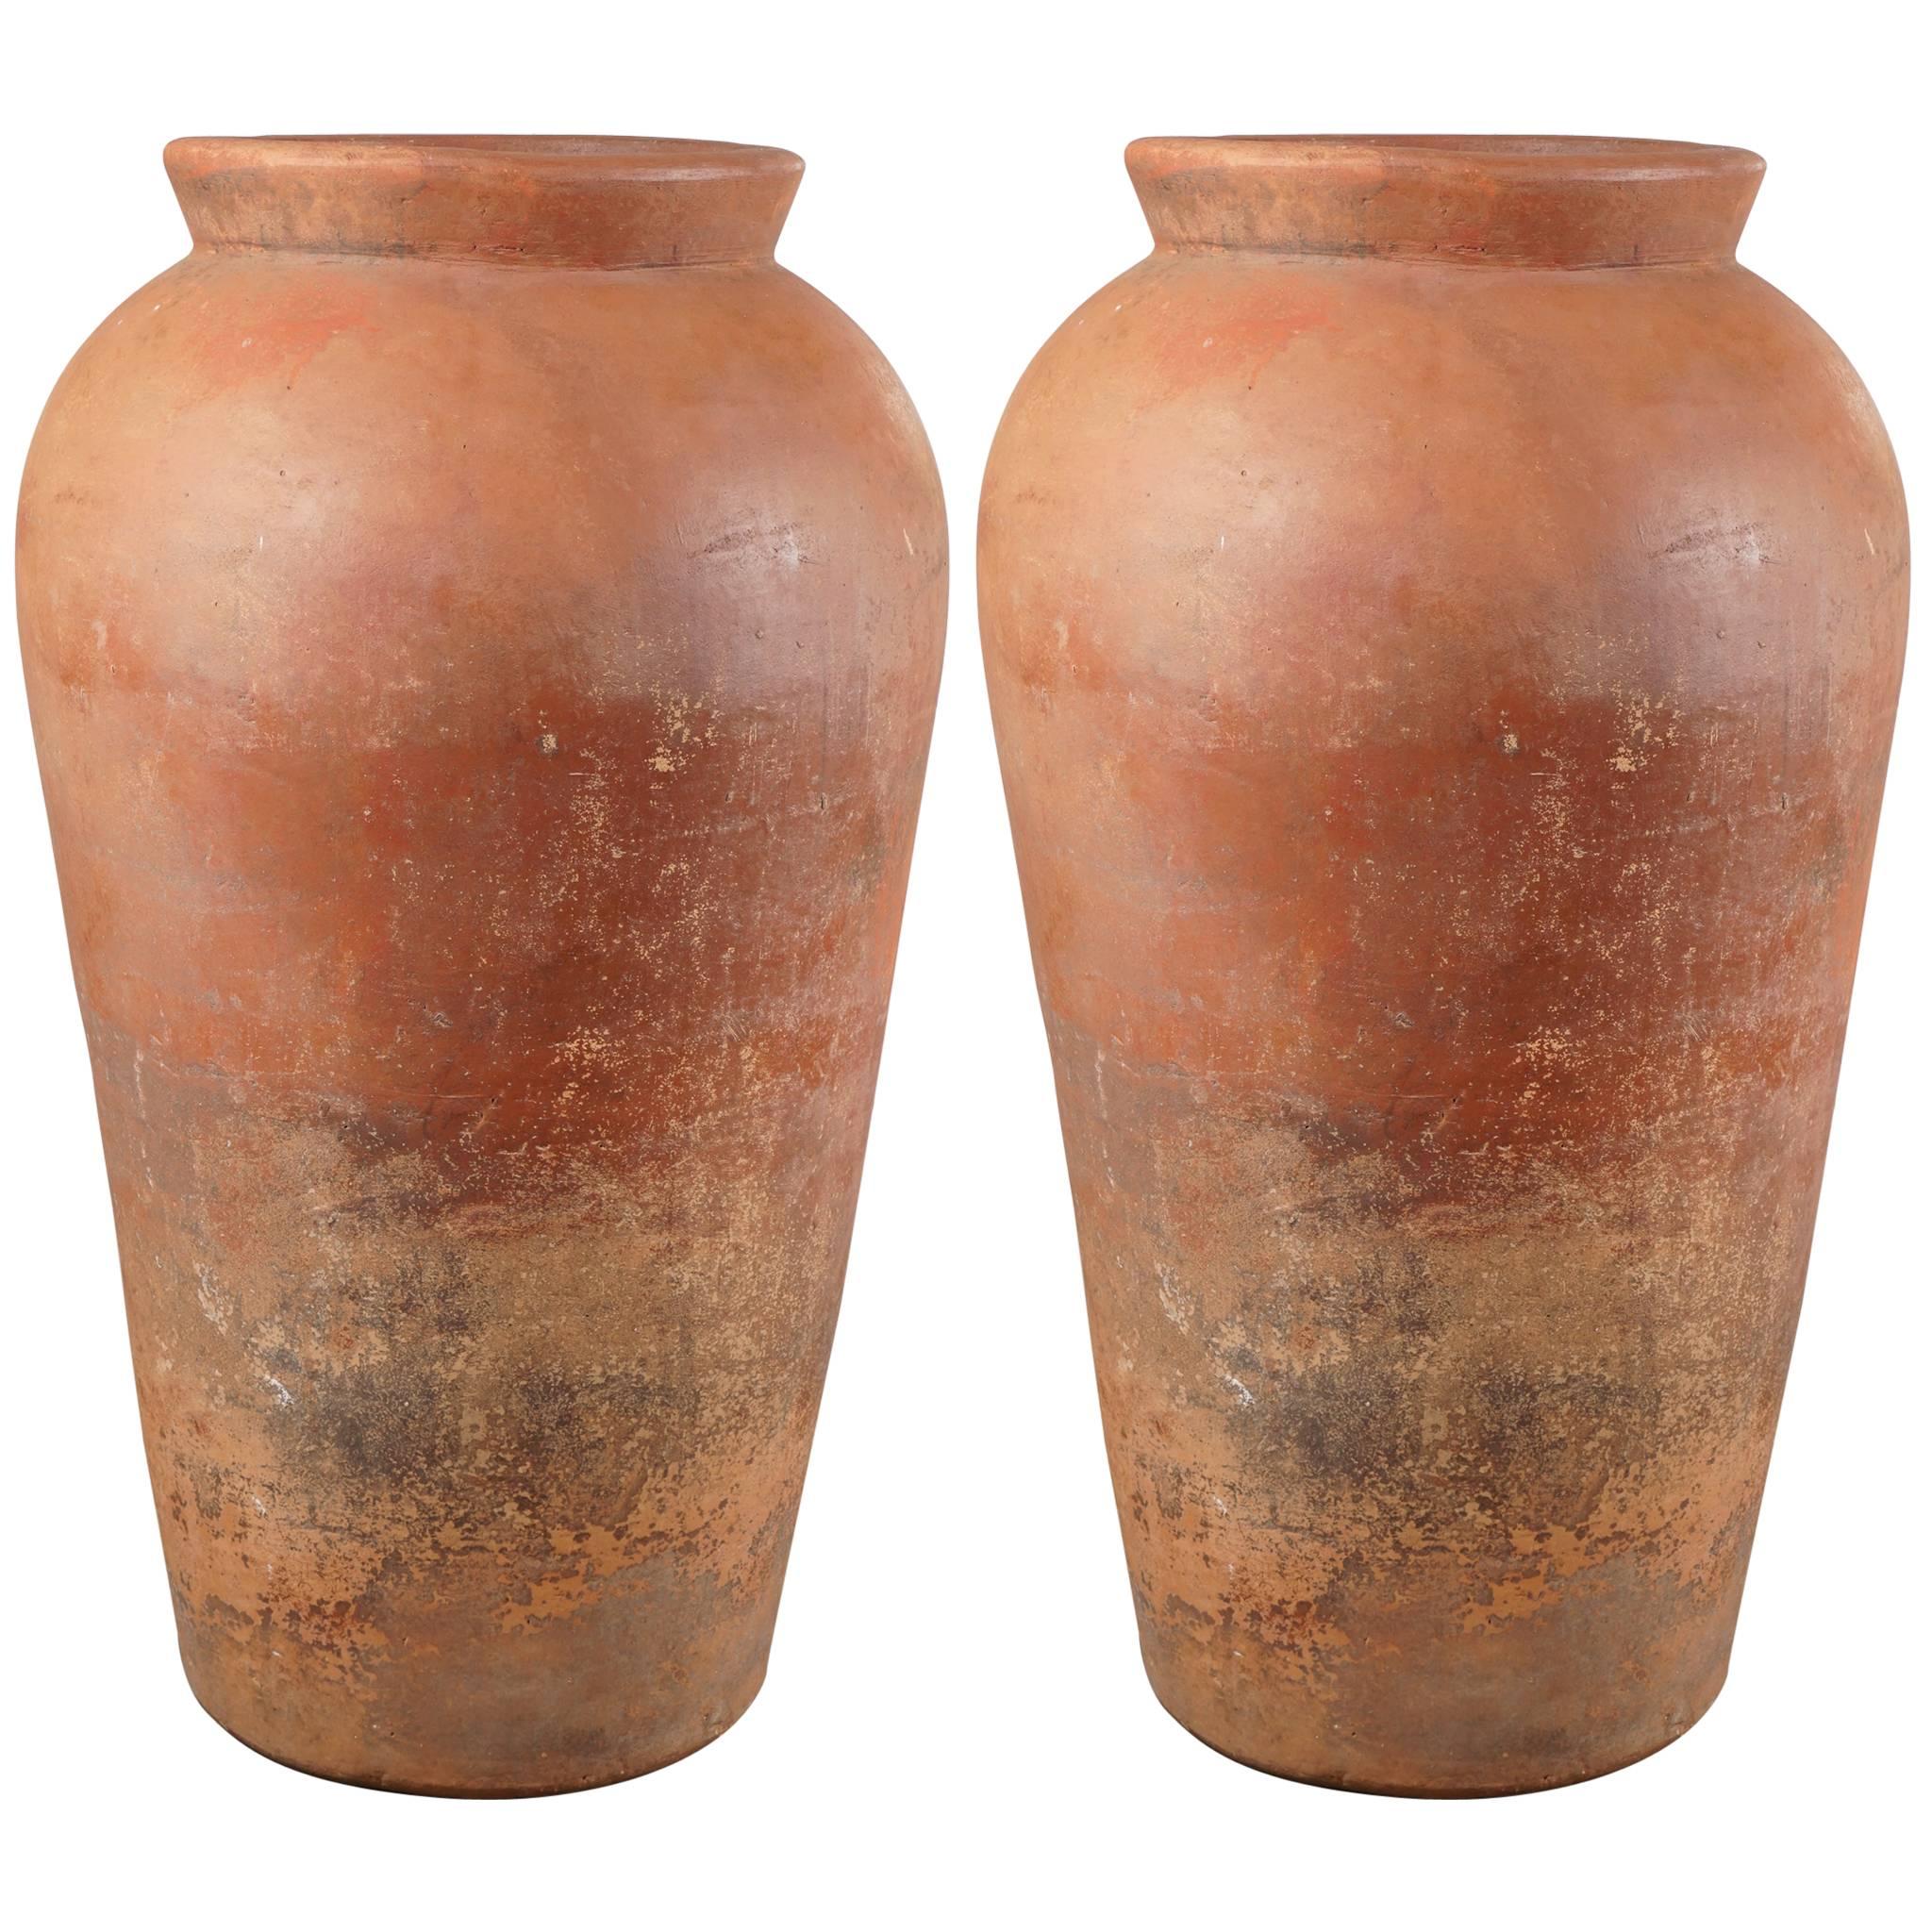 Pair of Monumental Terracotta Jars